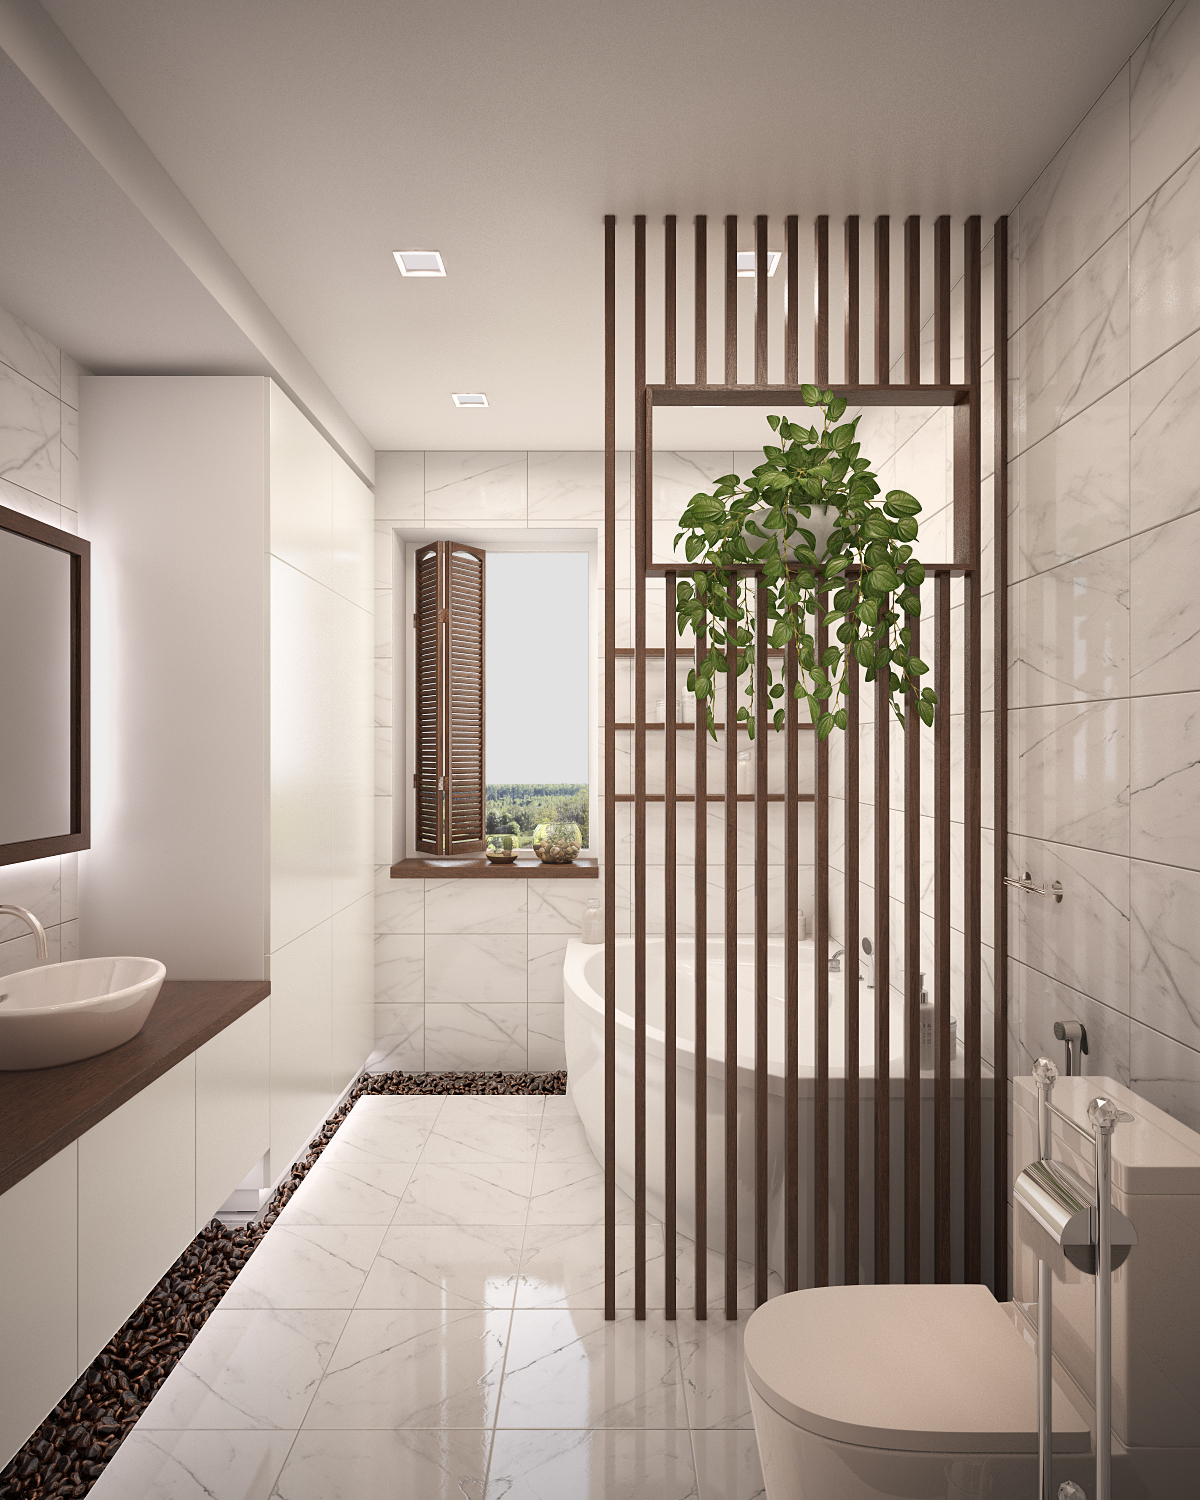 A bathroom "biorelax" in 3d max vray 3.0 image